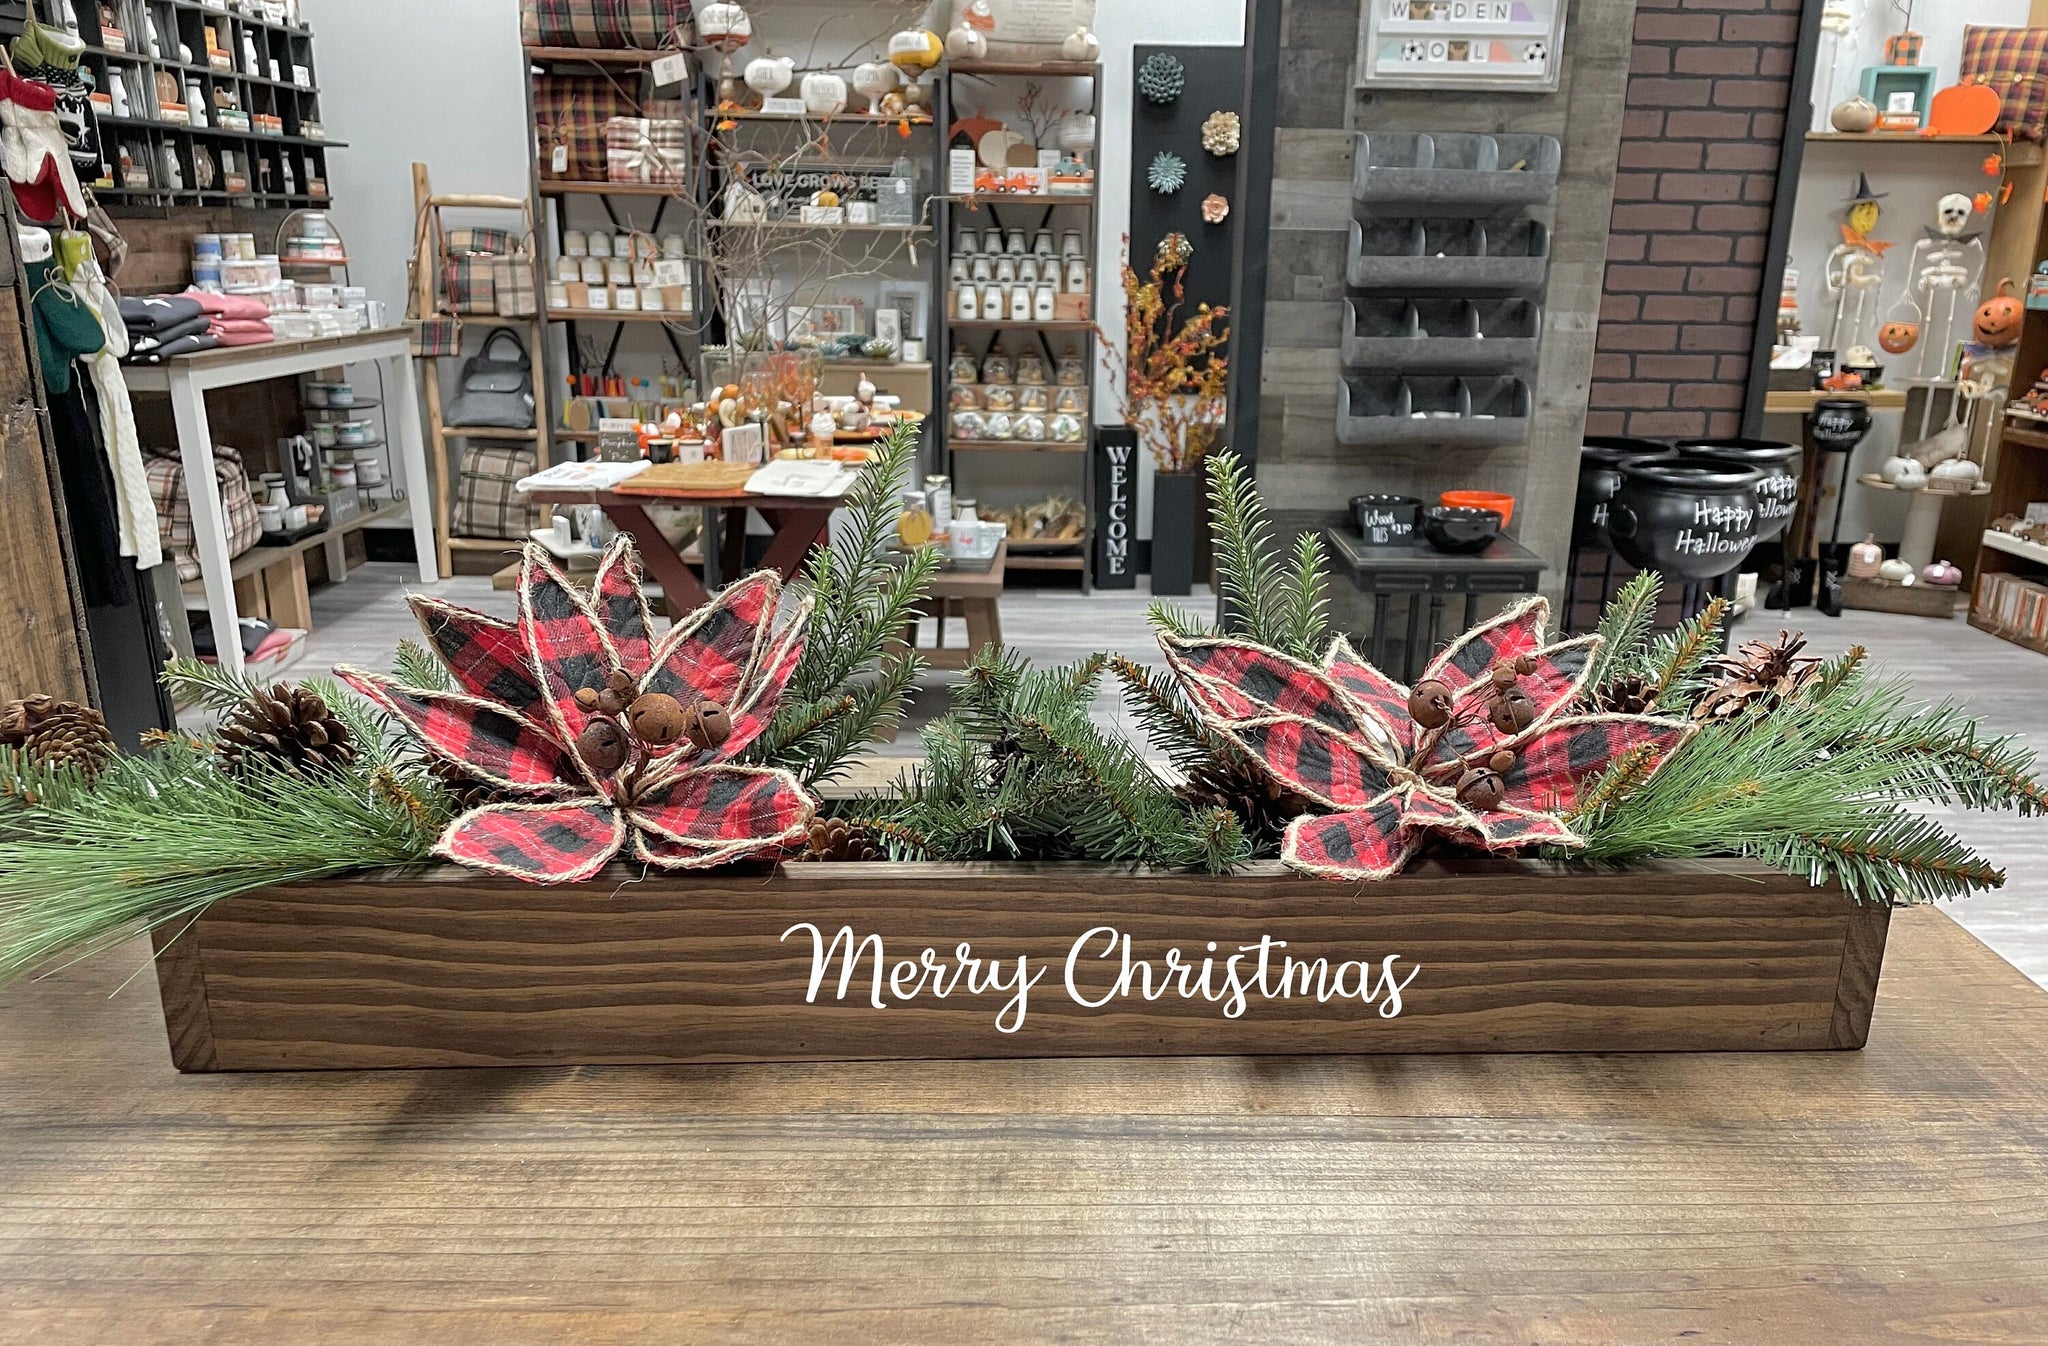 Personalized Christmas centerpiece, Wooden box for table, Christmas floral arrangement, Plaid poinsettia, Christmas decor, Hostess gift